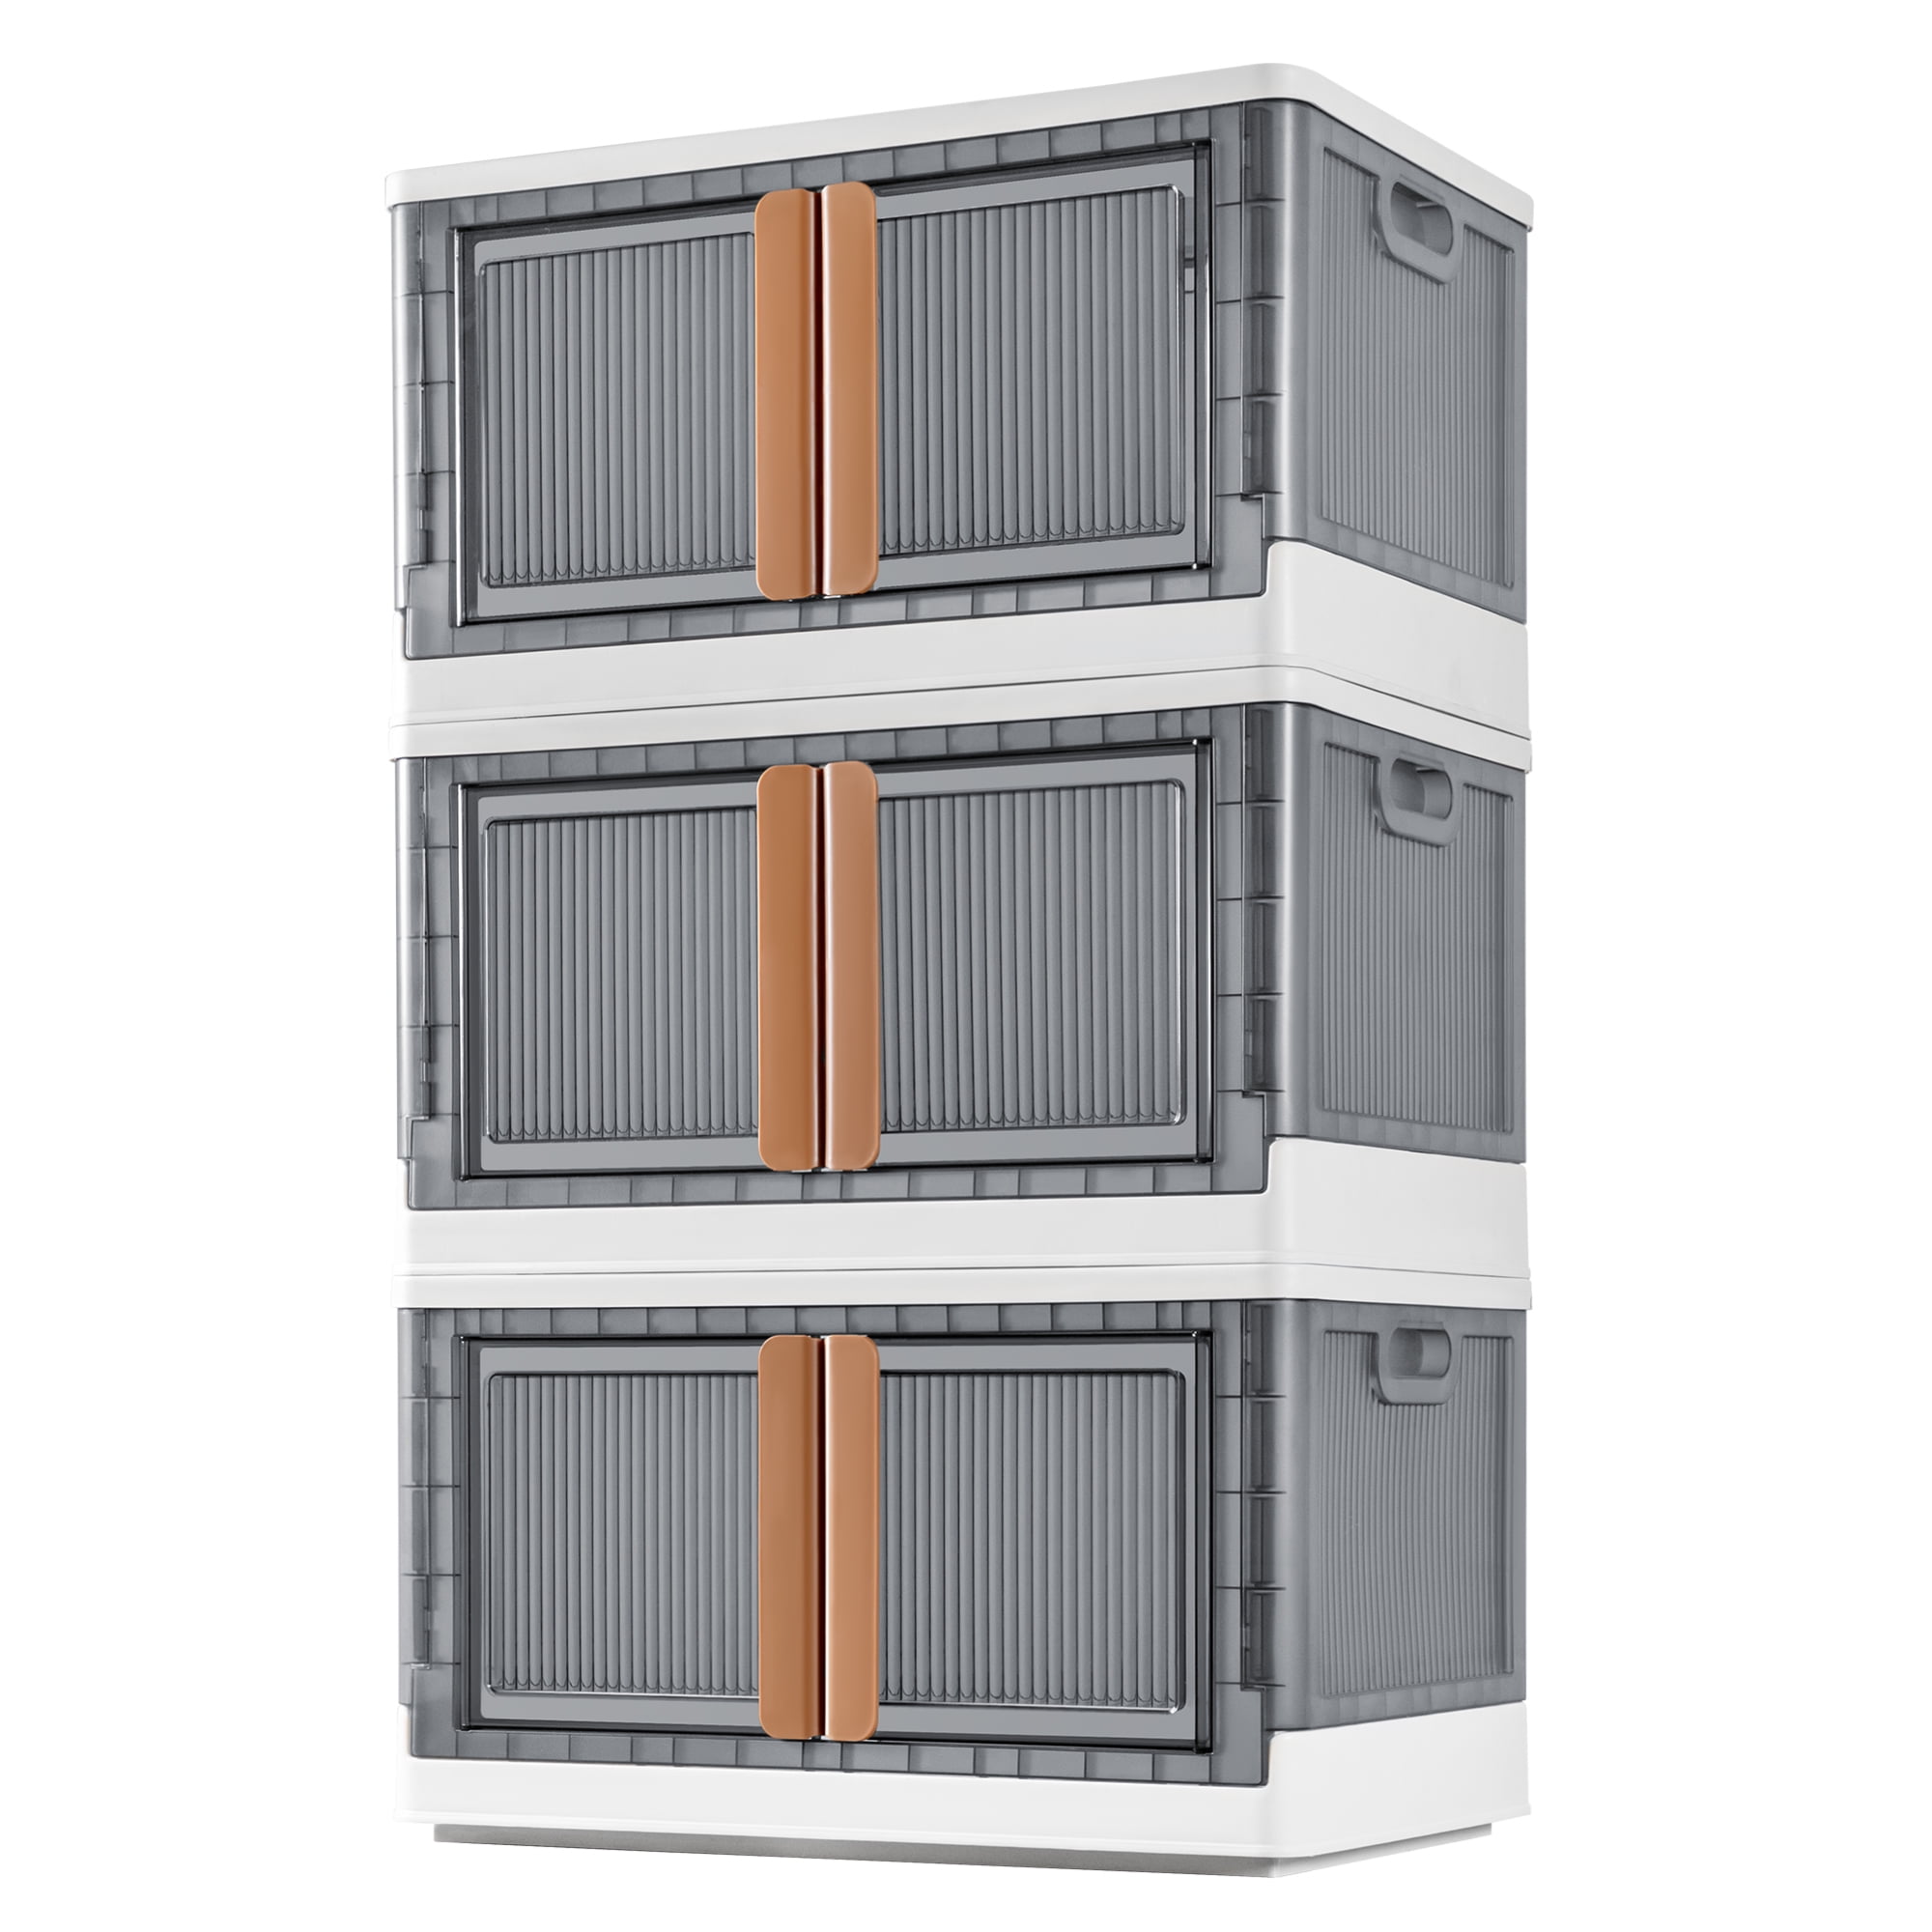 Karramlili Extra Large Storage Bins with Lids - 27Gal Plastic Storage Bins with Doors, 3 Packs Stackable Storage Bins for Closet Organizers and Storage, Folding